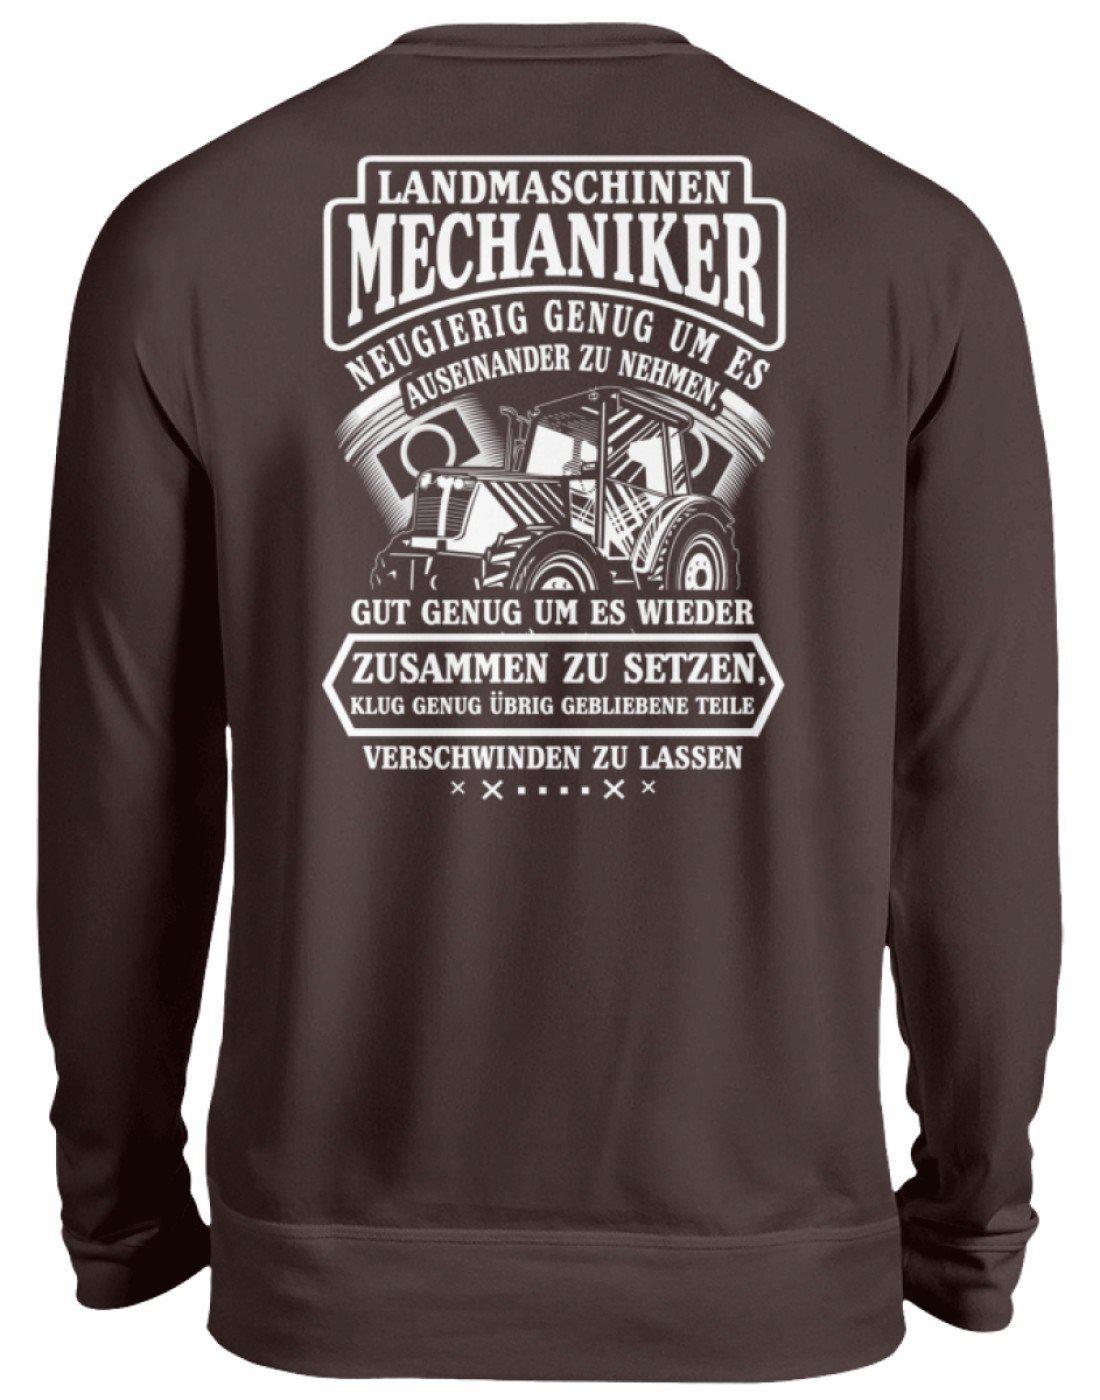 Mechaniker Neugierig · Unisex Sweatshirt Pullover-Unisex Sweatshirt-Hot Chocolate-S-Agrarstarz